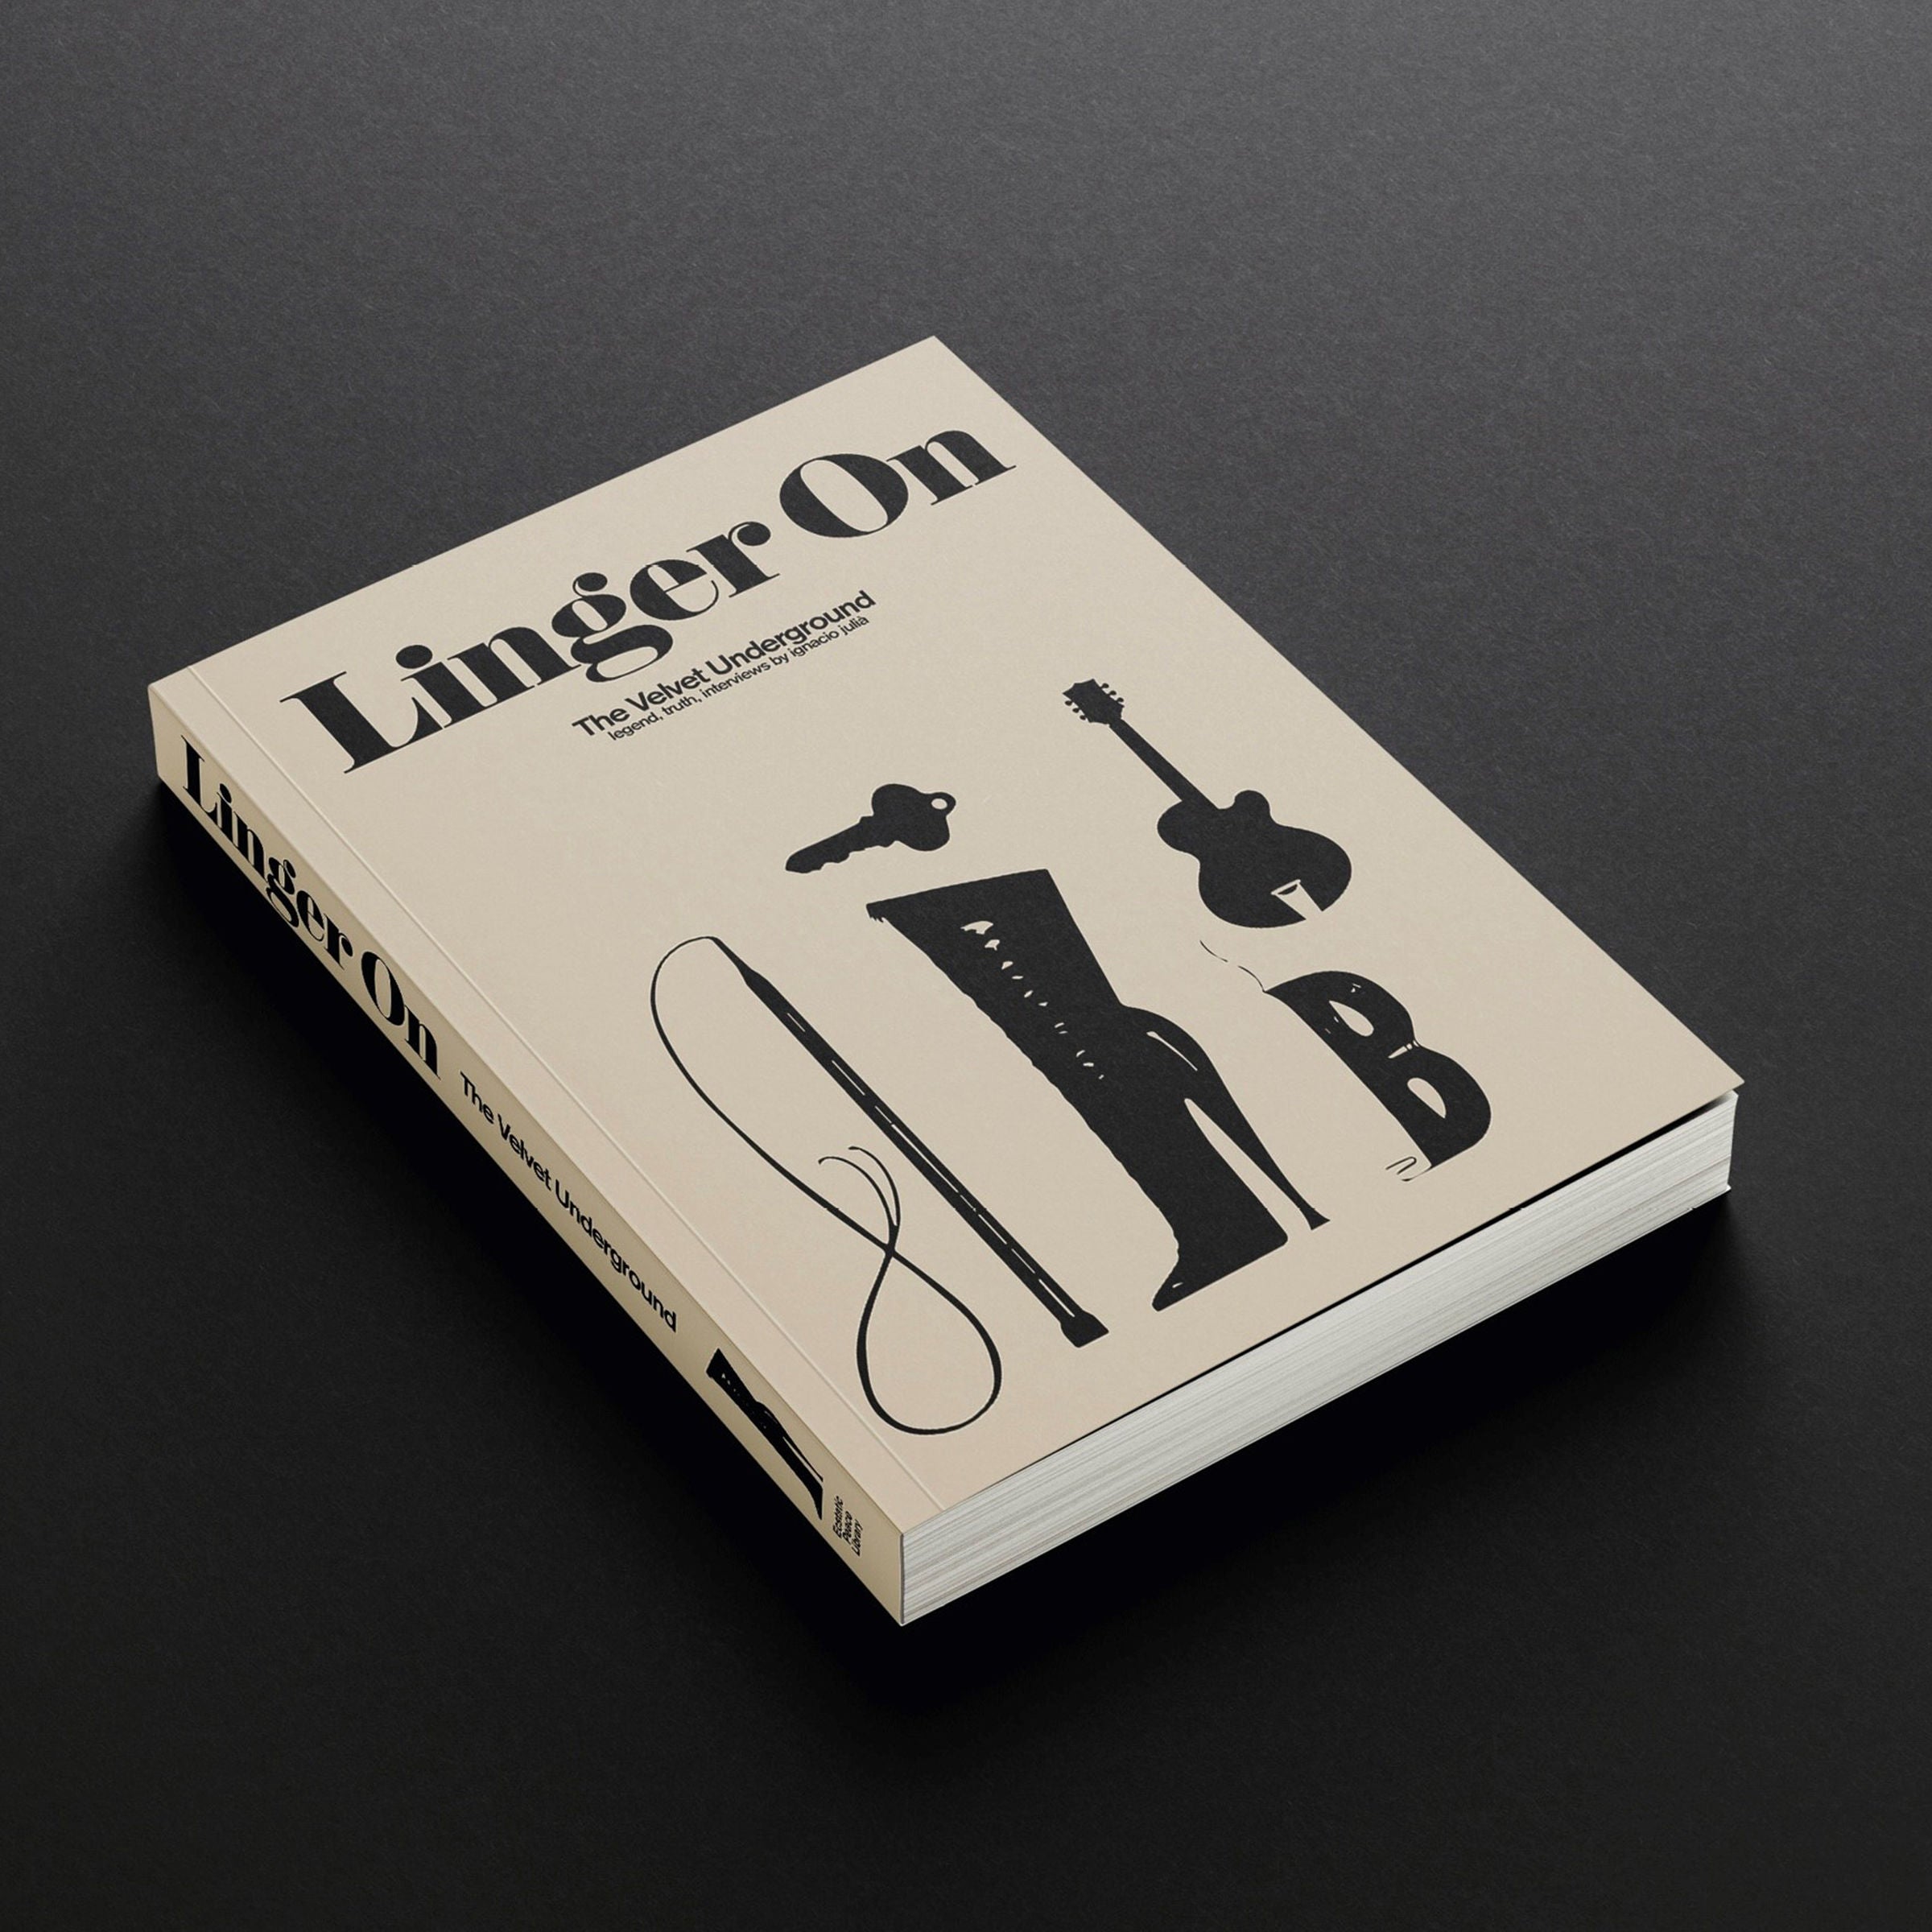 Linger On - The Velvet Underground: Limited Edition Book